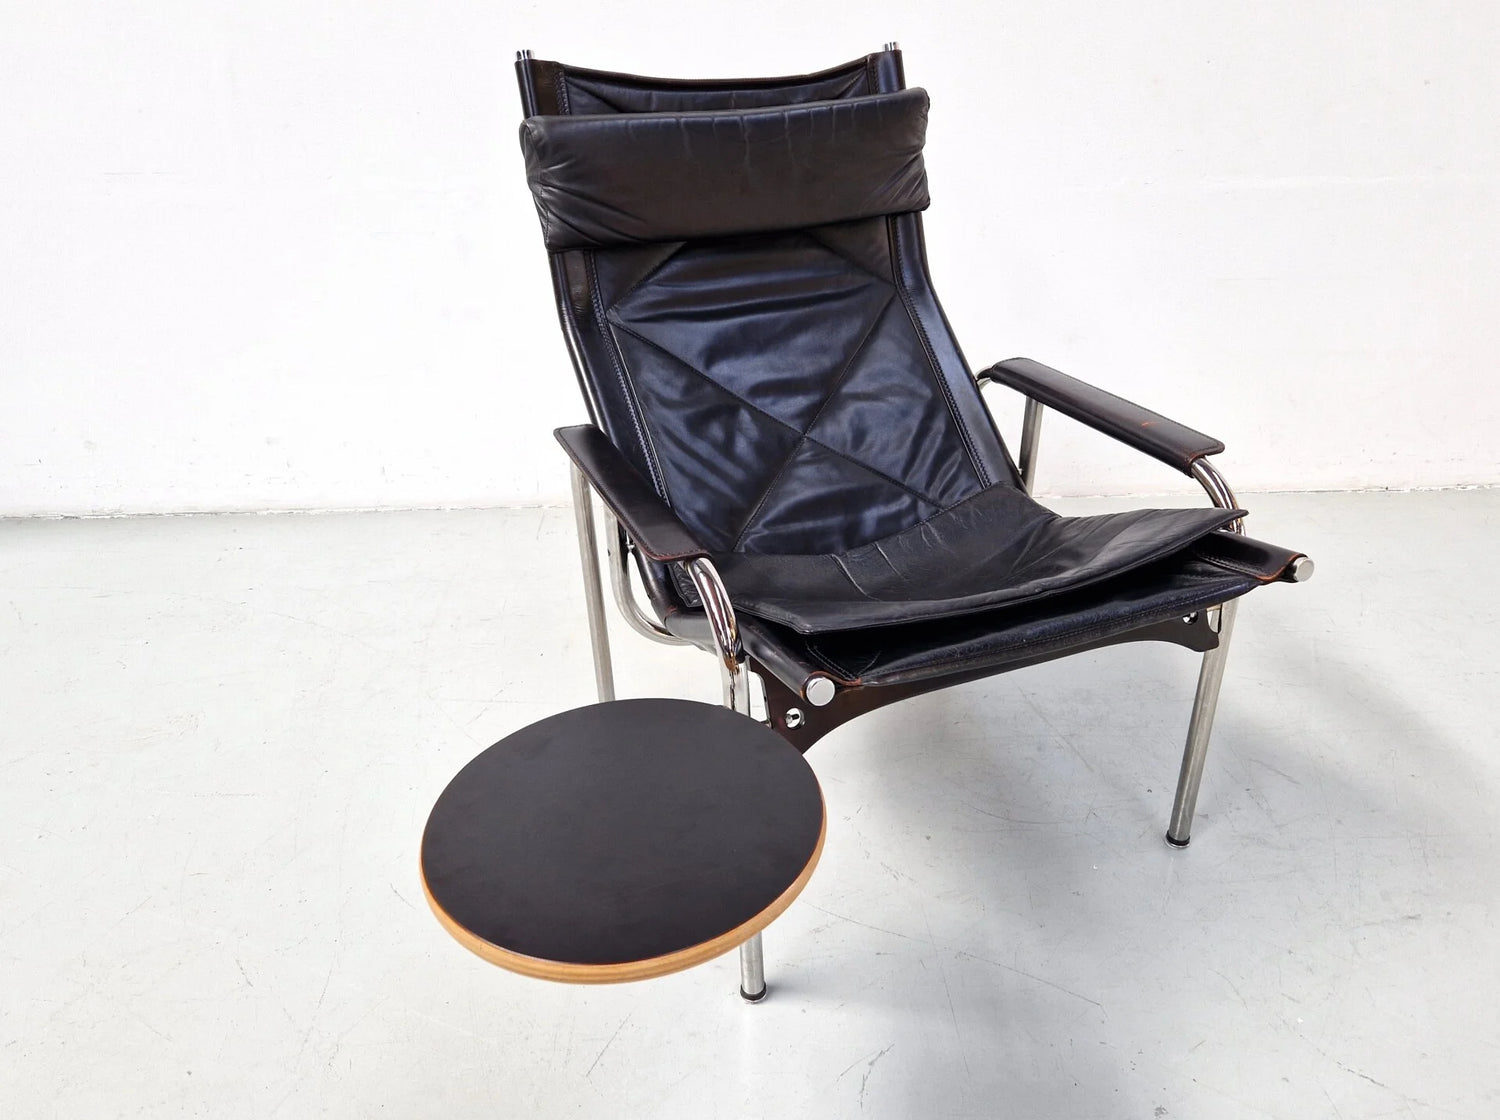 Oker Vintage -Lounge Chair HE-1106 by Hans Eichenberger for Kollektion Strässle, 1978 - CollectorsRdam